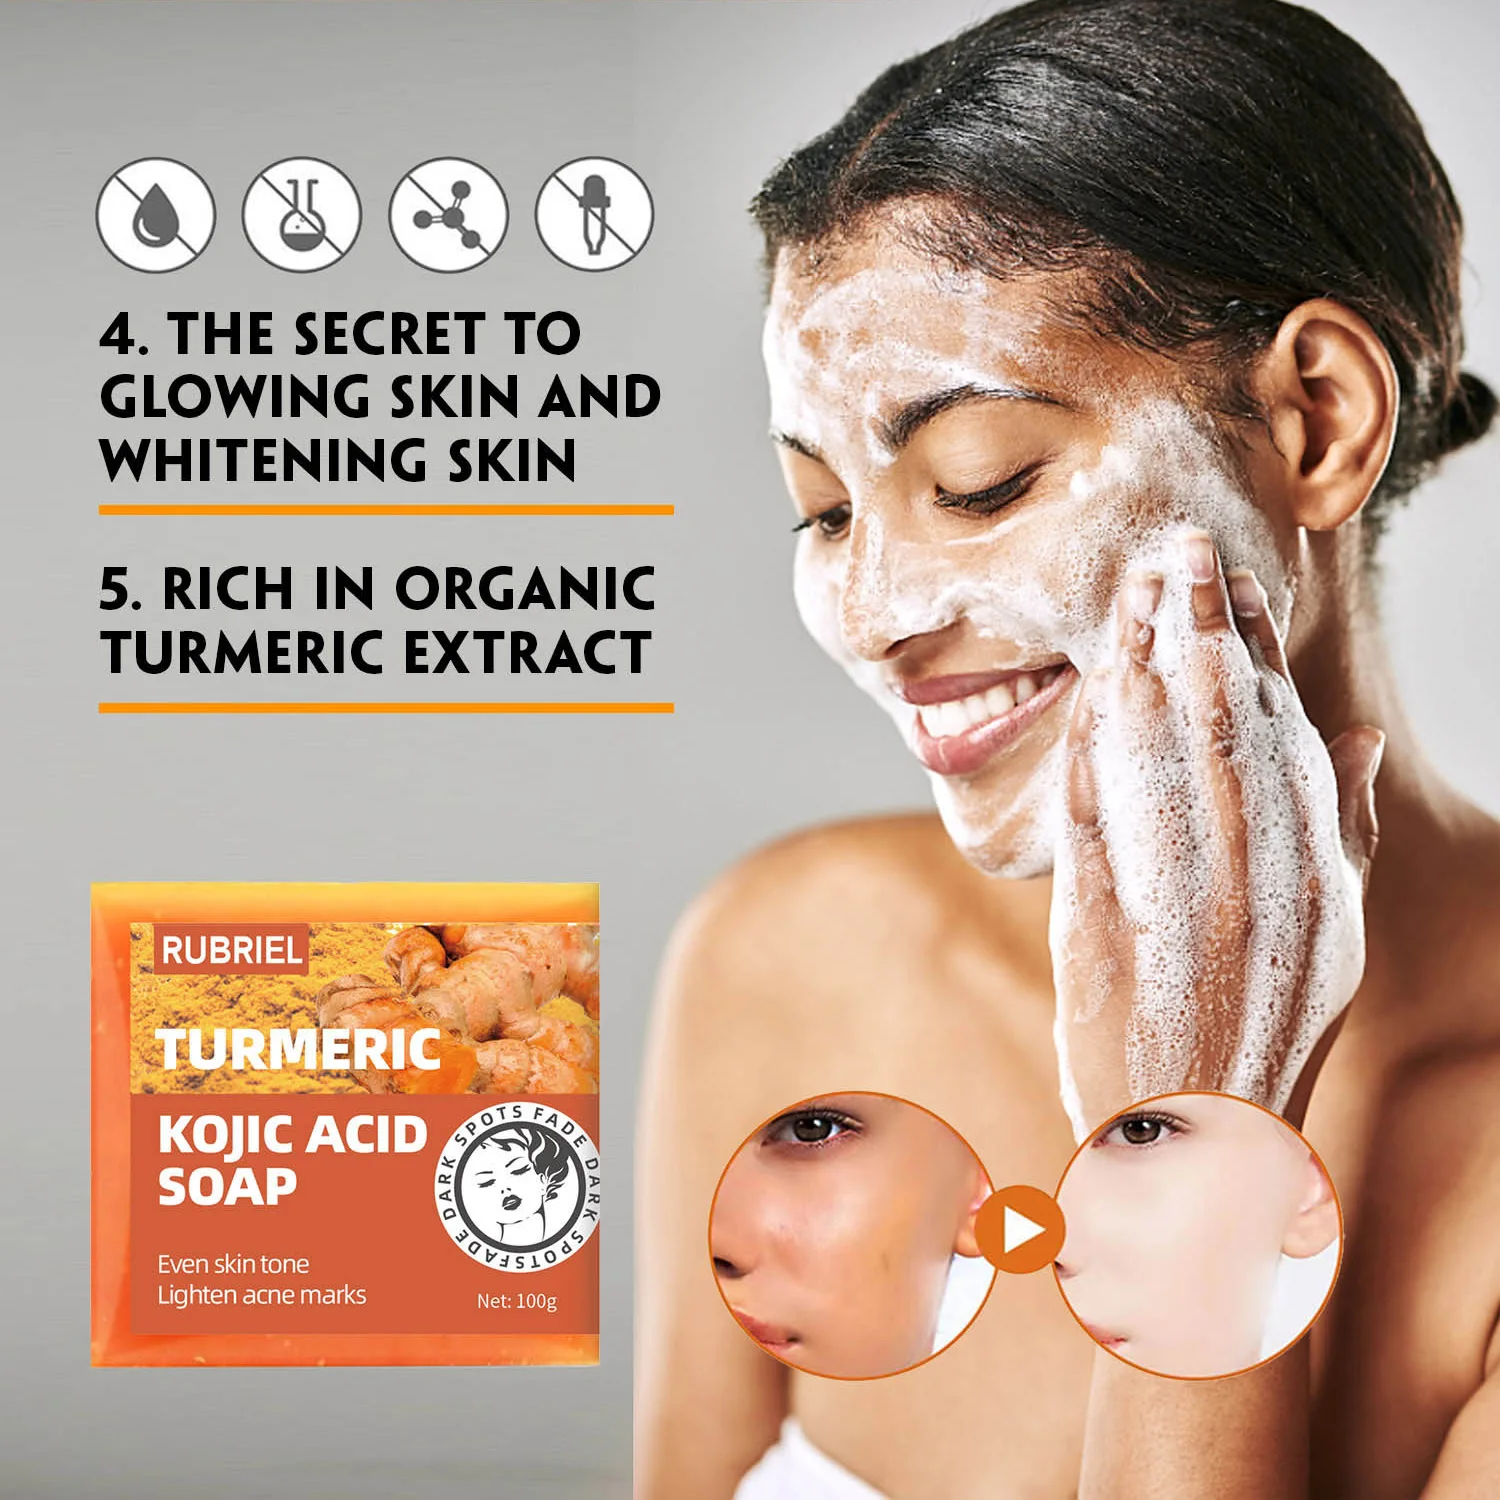 

Turmeric Kojic Acid Soap Whitening Even Skin Tone Acne Removal Soaps for Dark Spot Skin Deep Cleansing Hydrating Handmade Soap